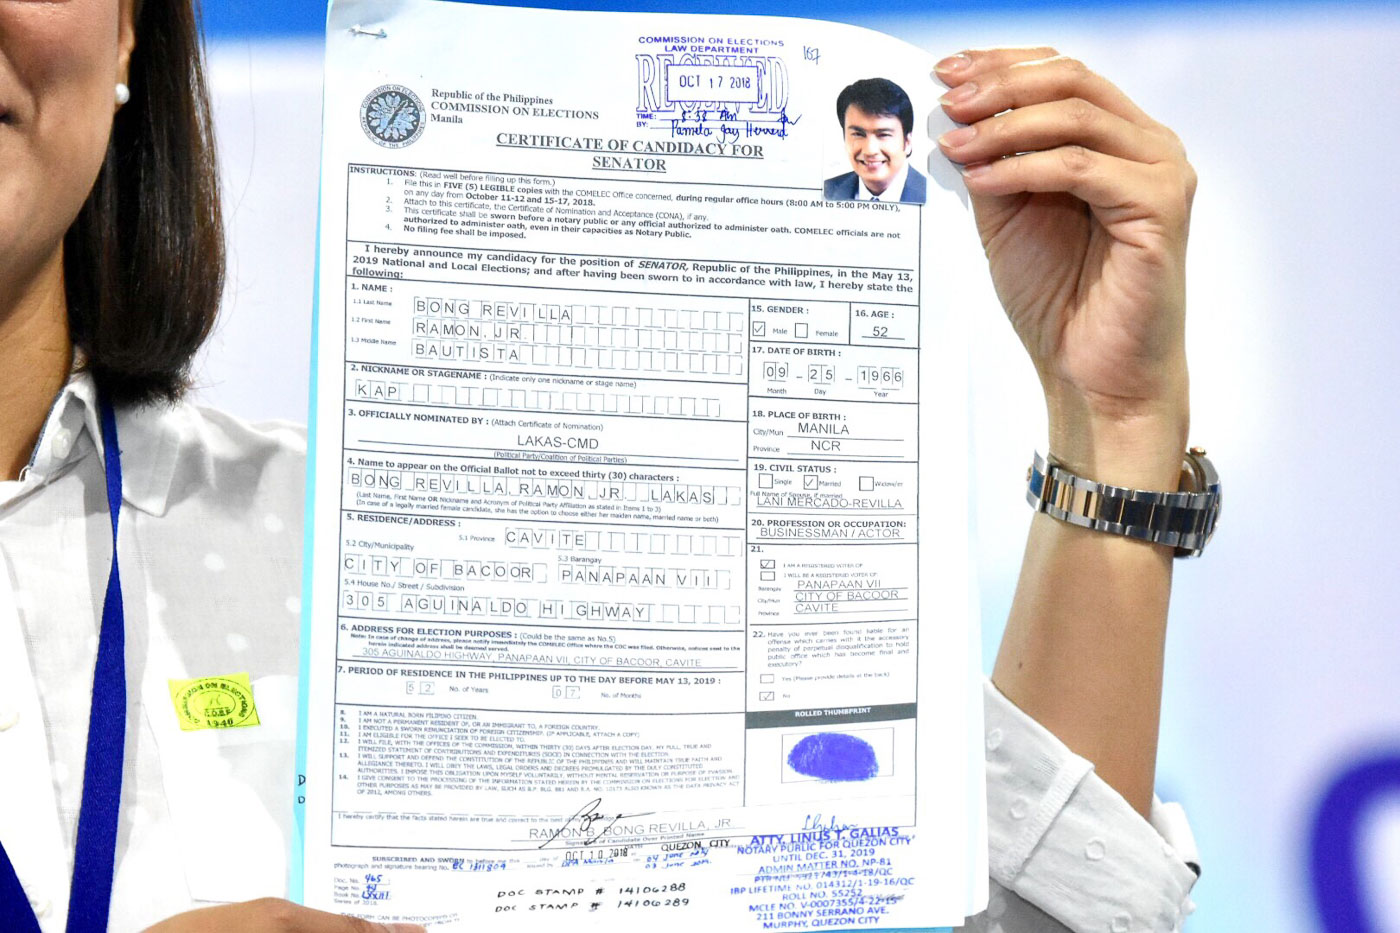 Former Sen. Bong Revilla files his certificate of candidacy for senator through wife, Cavite Rep. Lani Mercado, on October 17, 2018 at the Comelec office in Manila. Photo by Angie de Silva/Rappler 